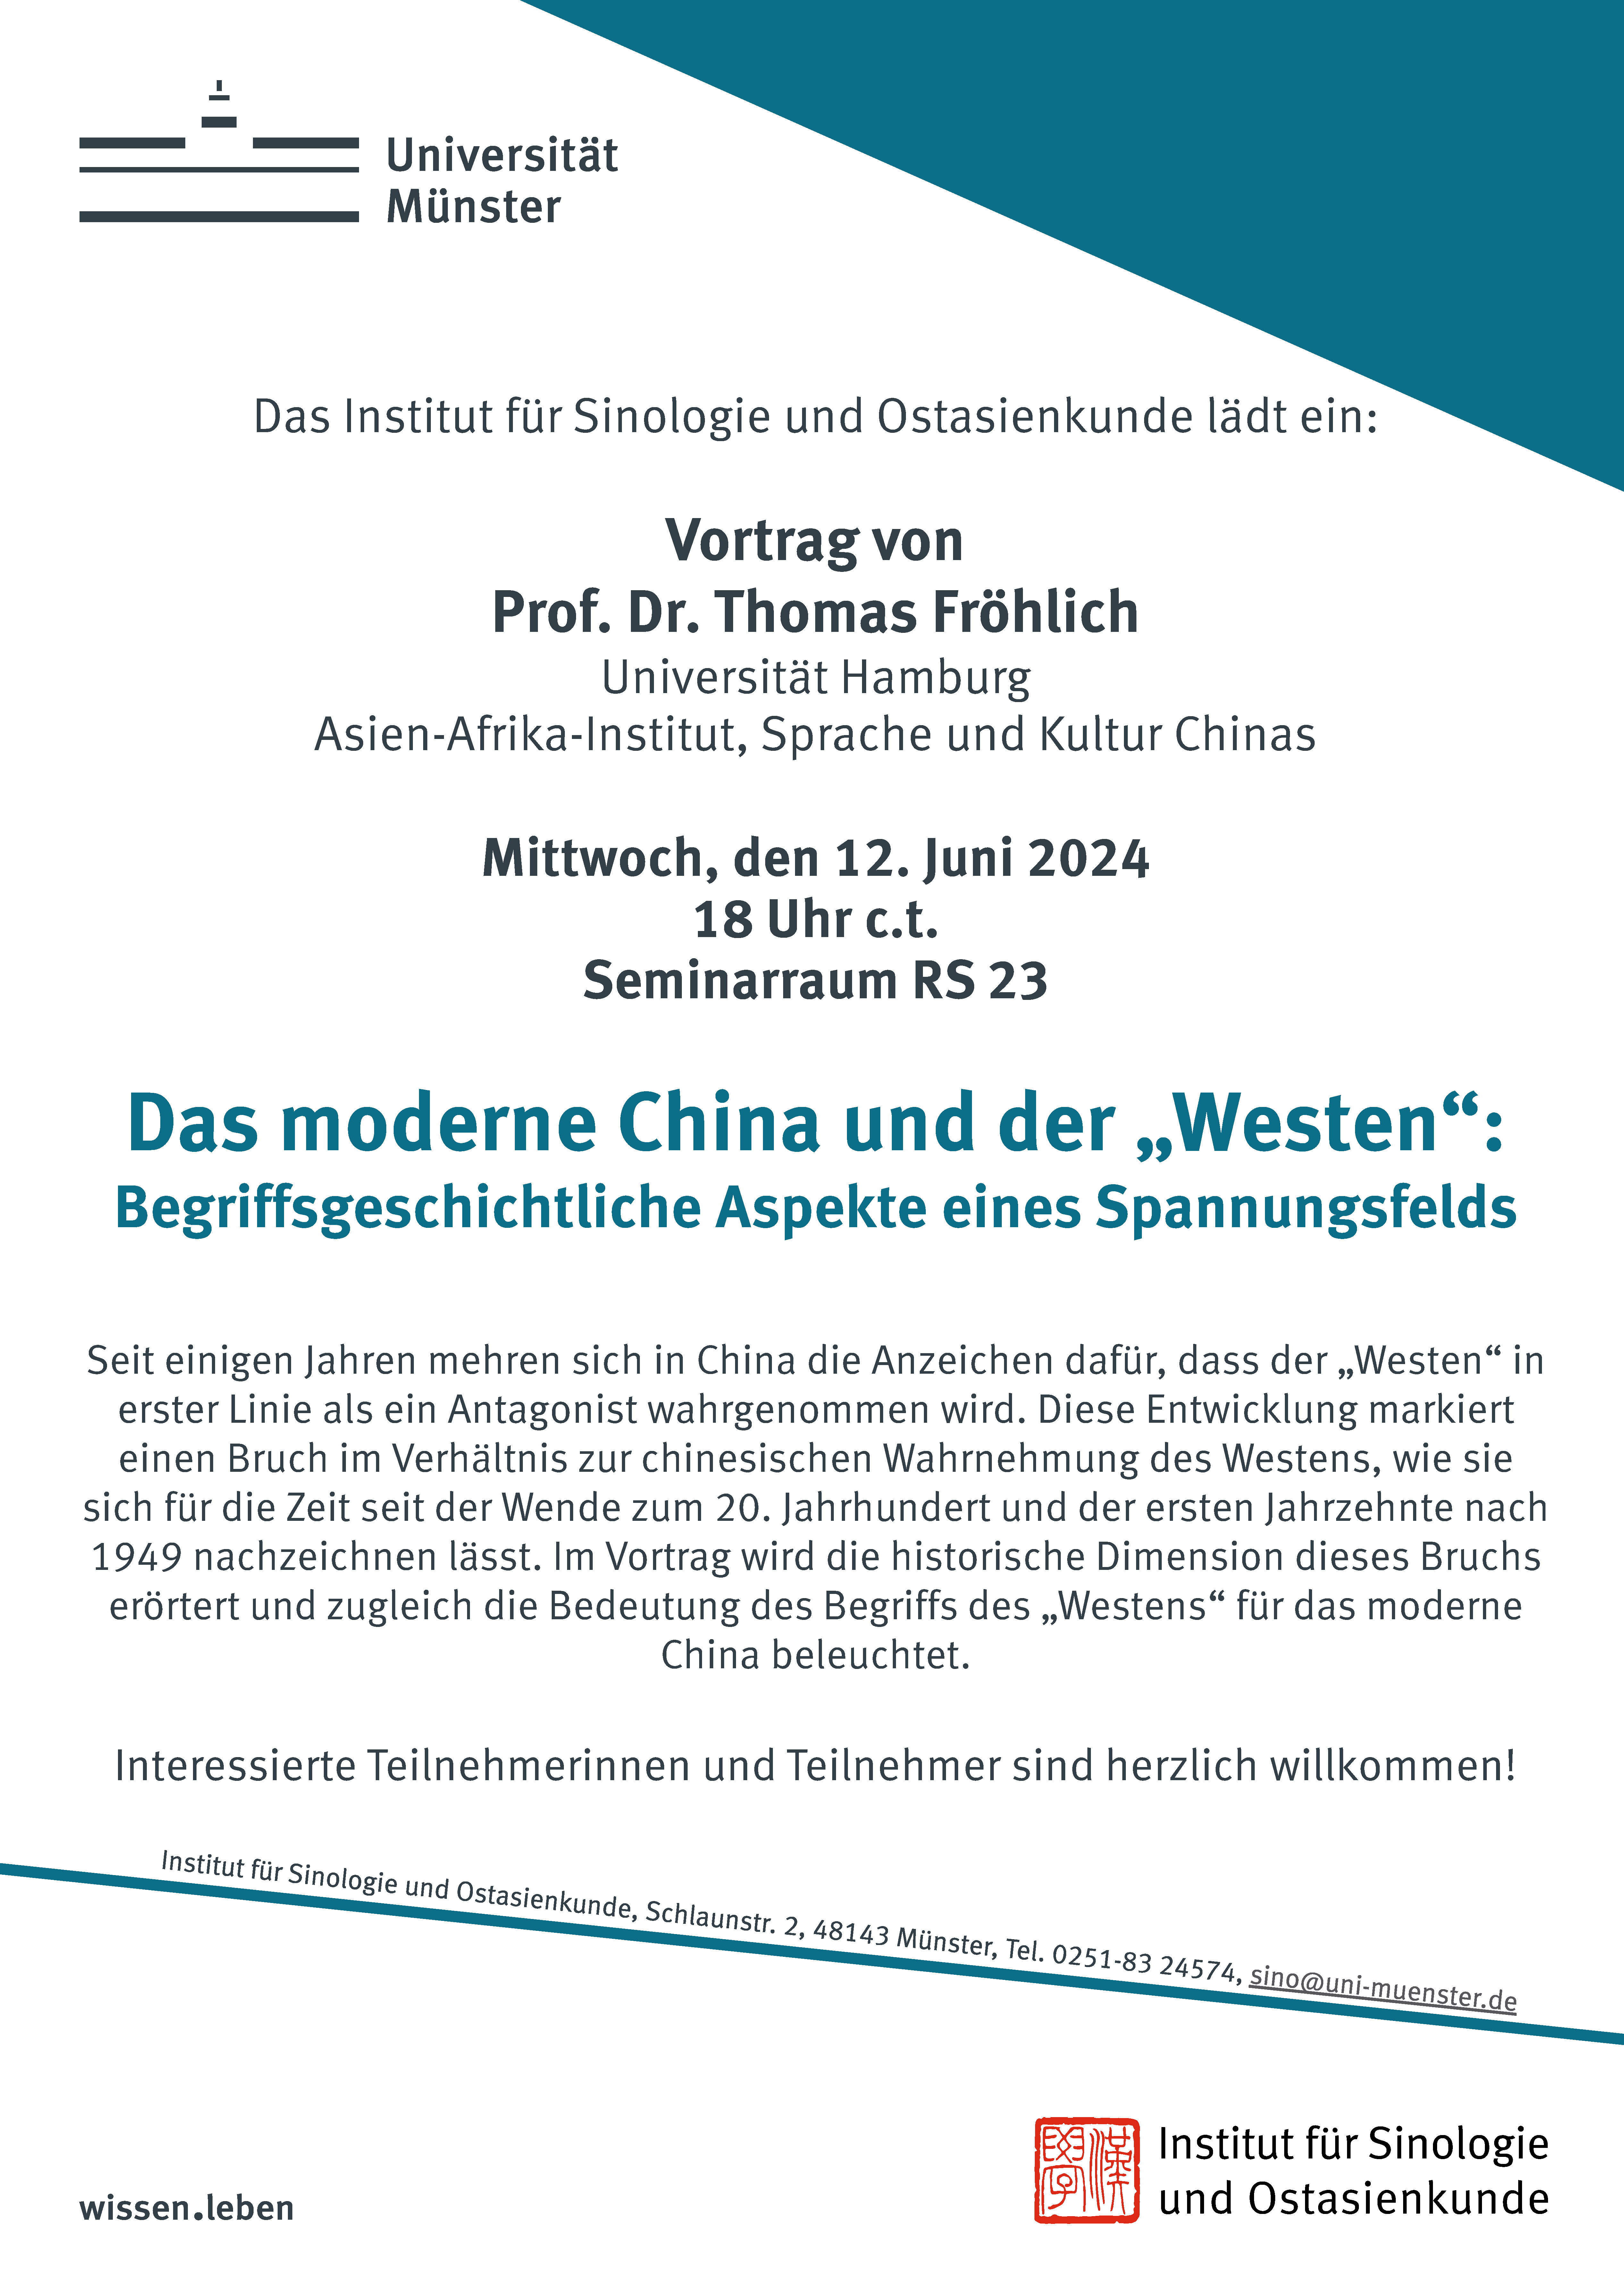 Vortragsplakat Prof. Dr. Thomas Fröhlich, 12. Juni 2024